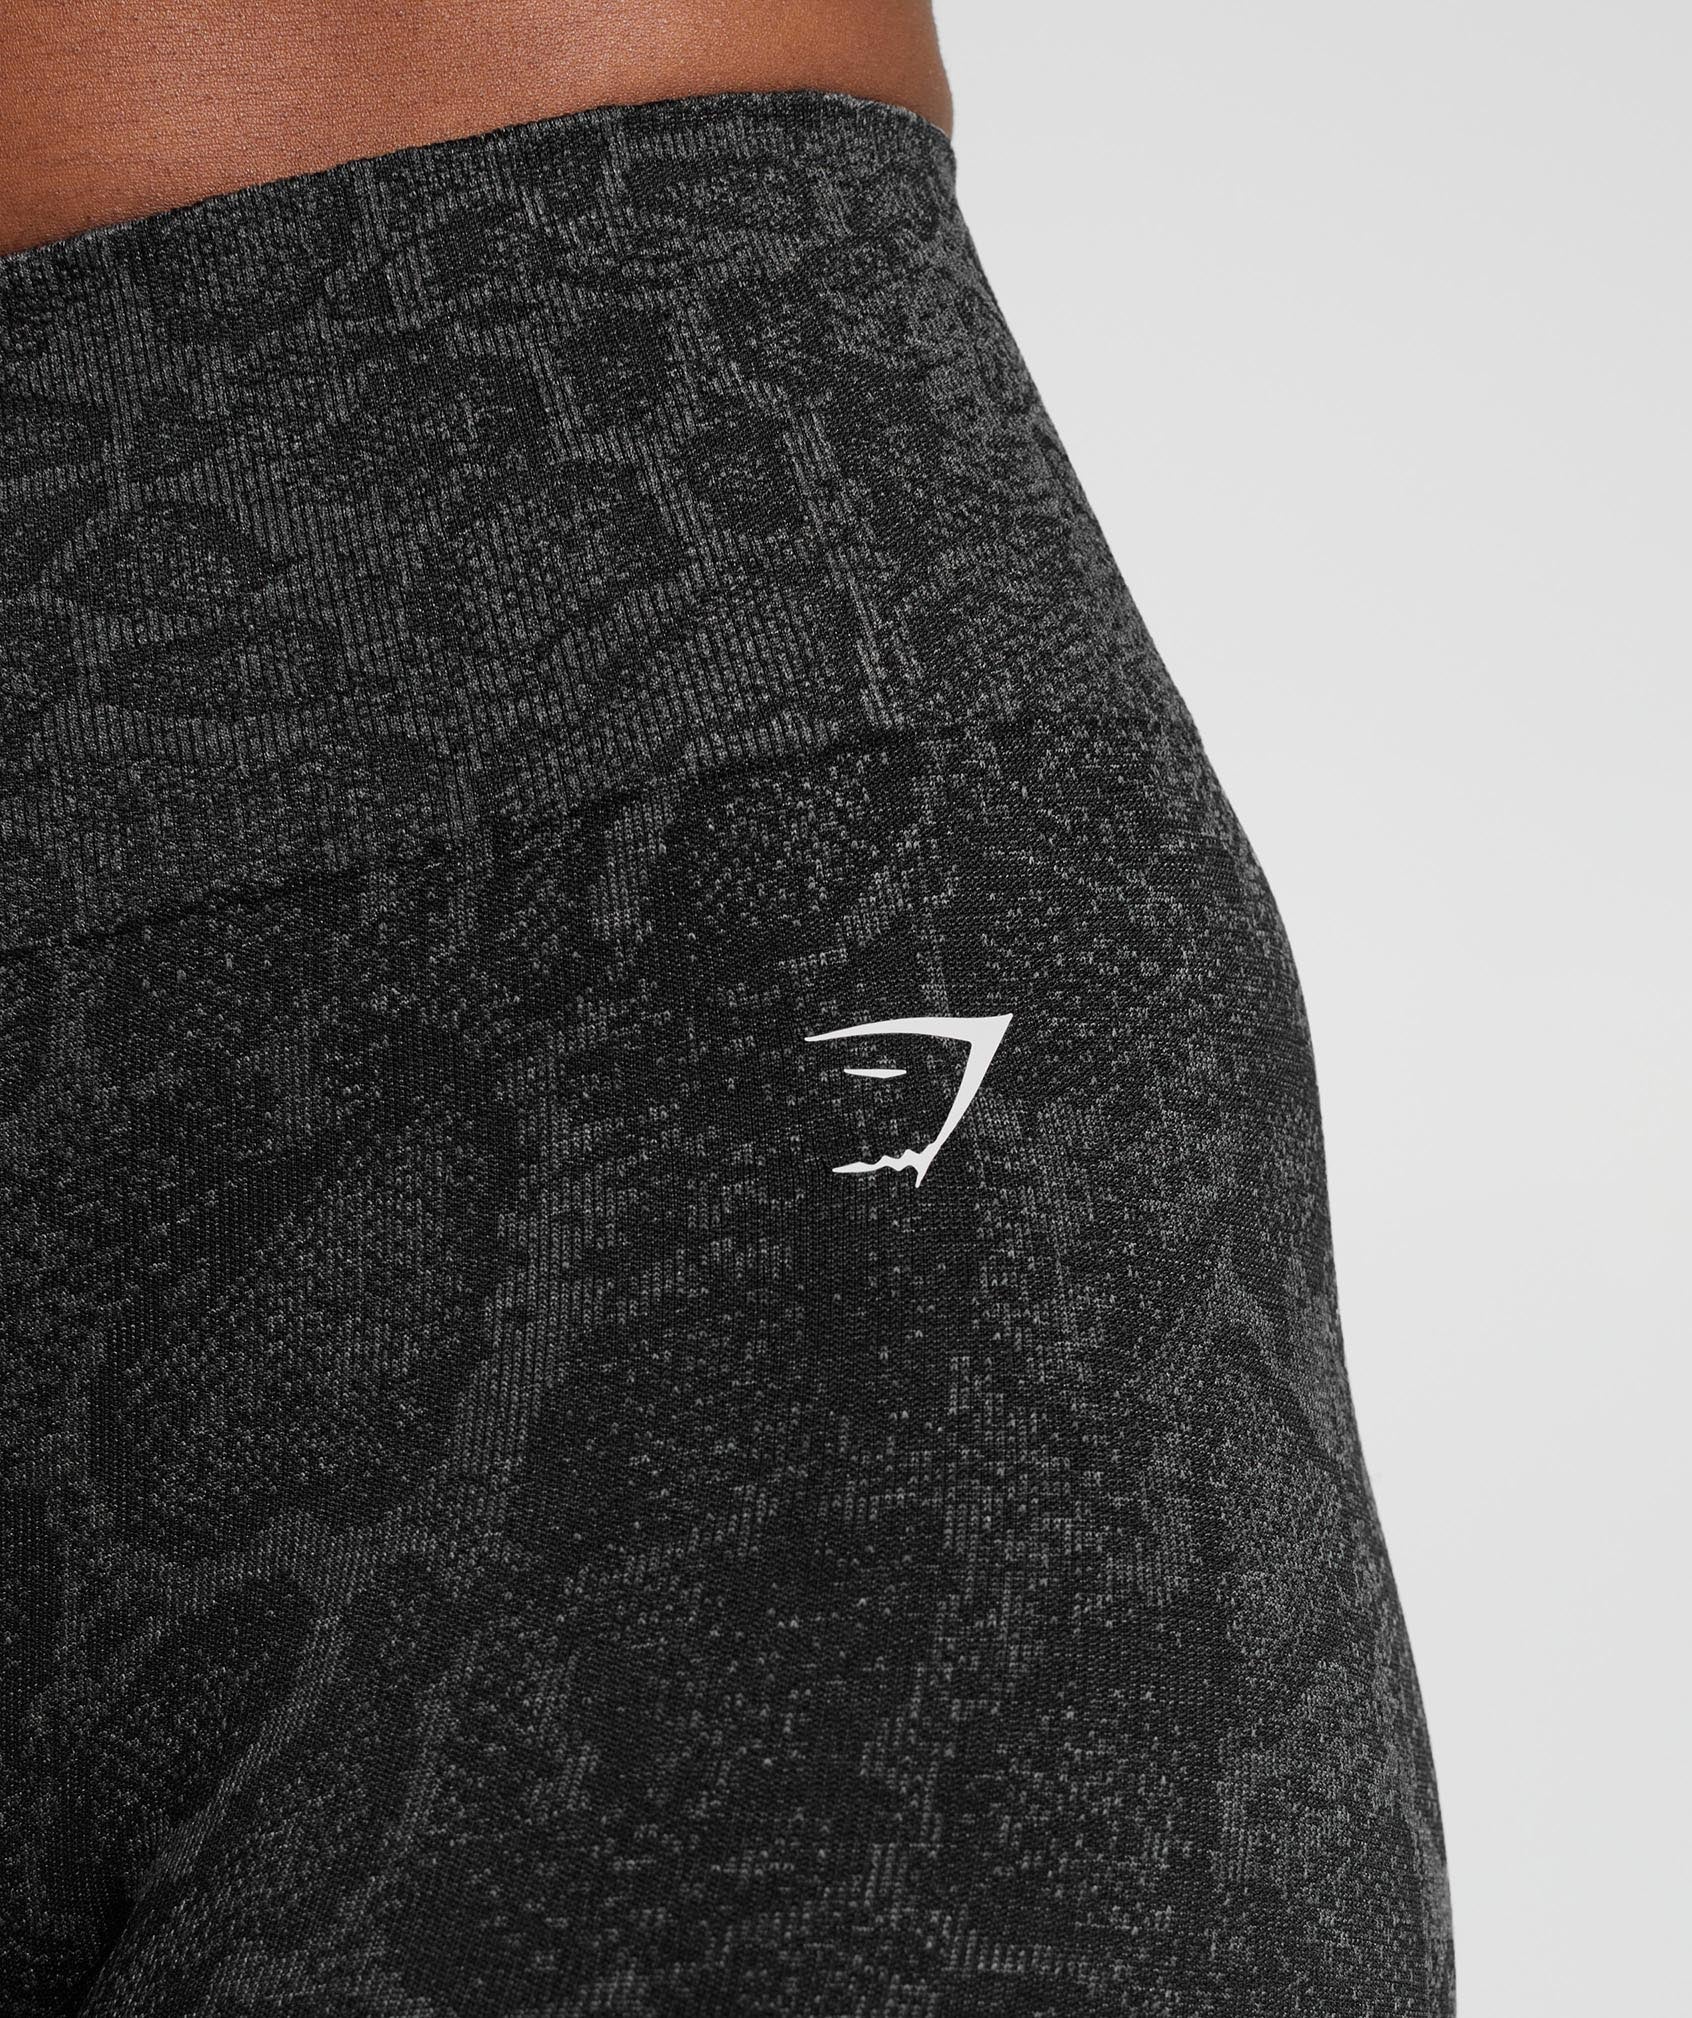 GYM SHARK S Women Leggings Dark Grey Patterned Stretch Logo